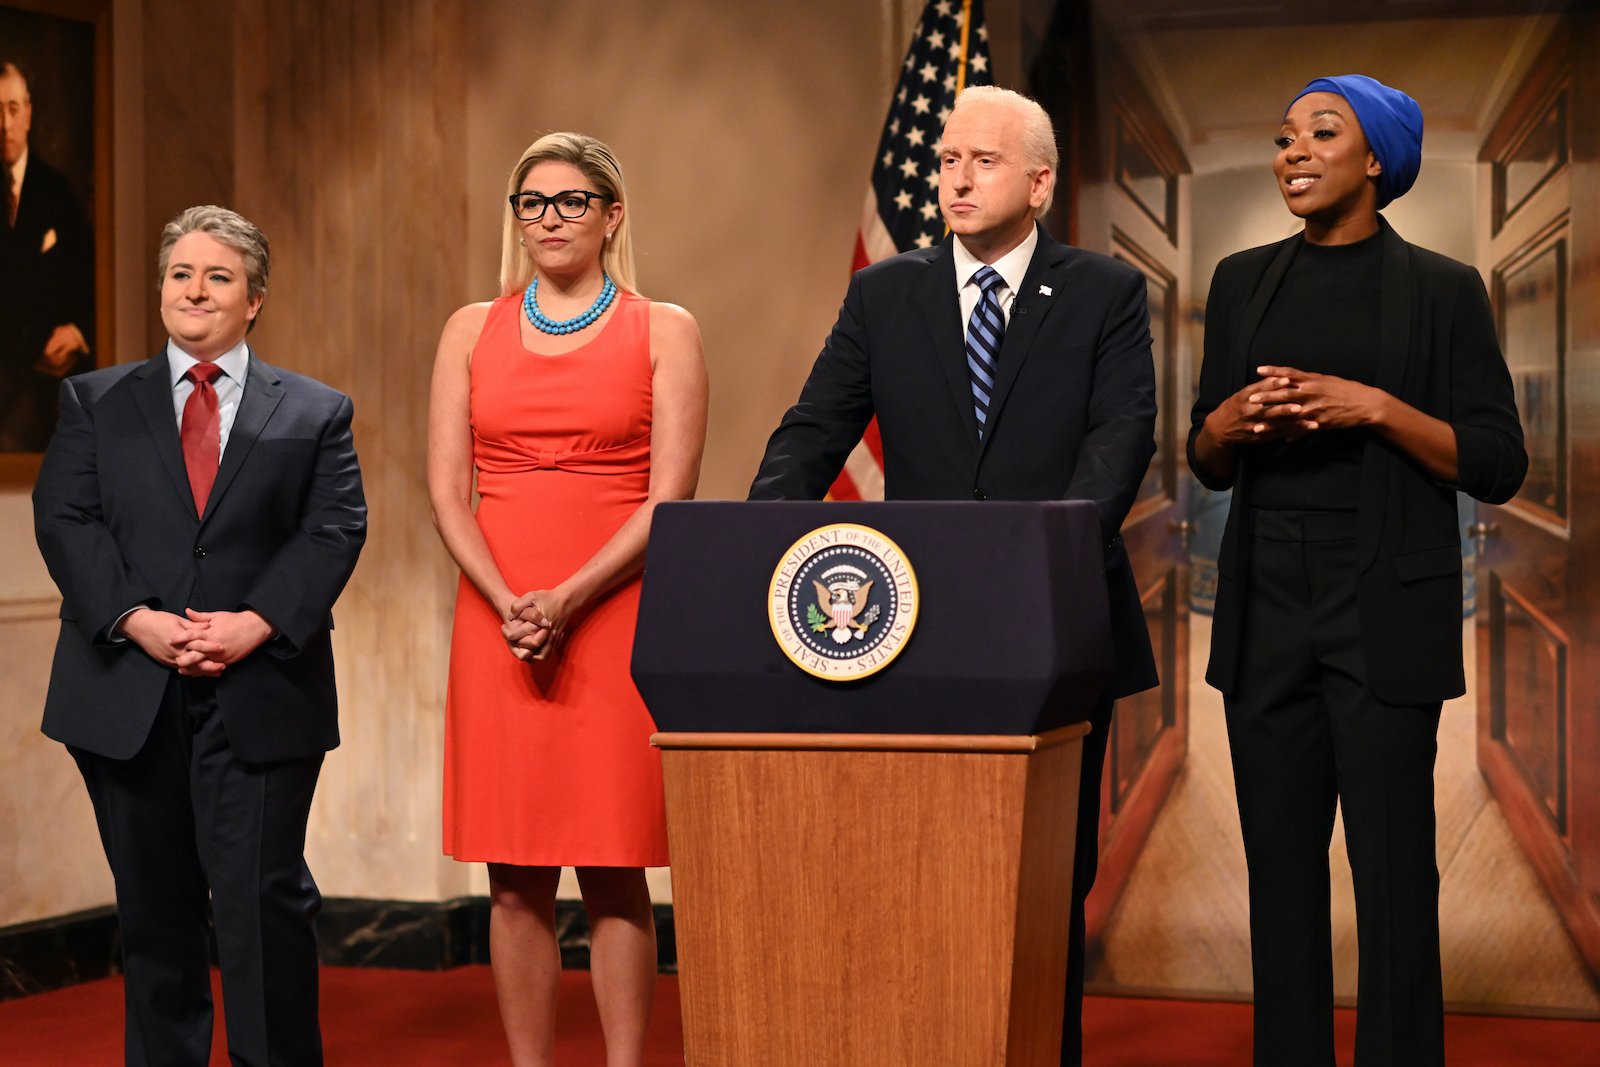 Who Played Biden on SNL? Aidy Bryant as Sen. Joe Manchin, Cecily Strong as Sen Krysten Sinema, James Austin Johnson as President Joe Biden, and Ego Nwodim as Rep. Ilhan Omar